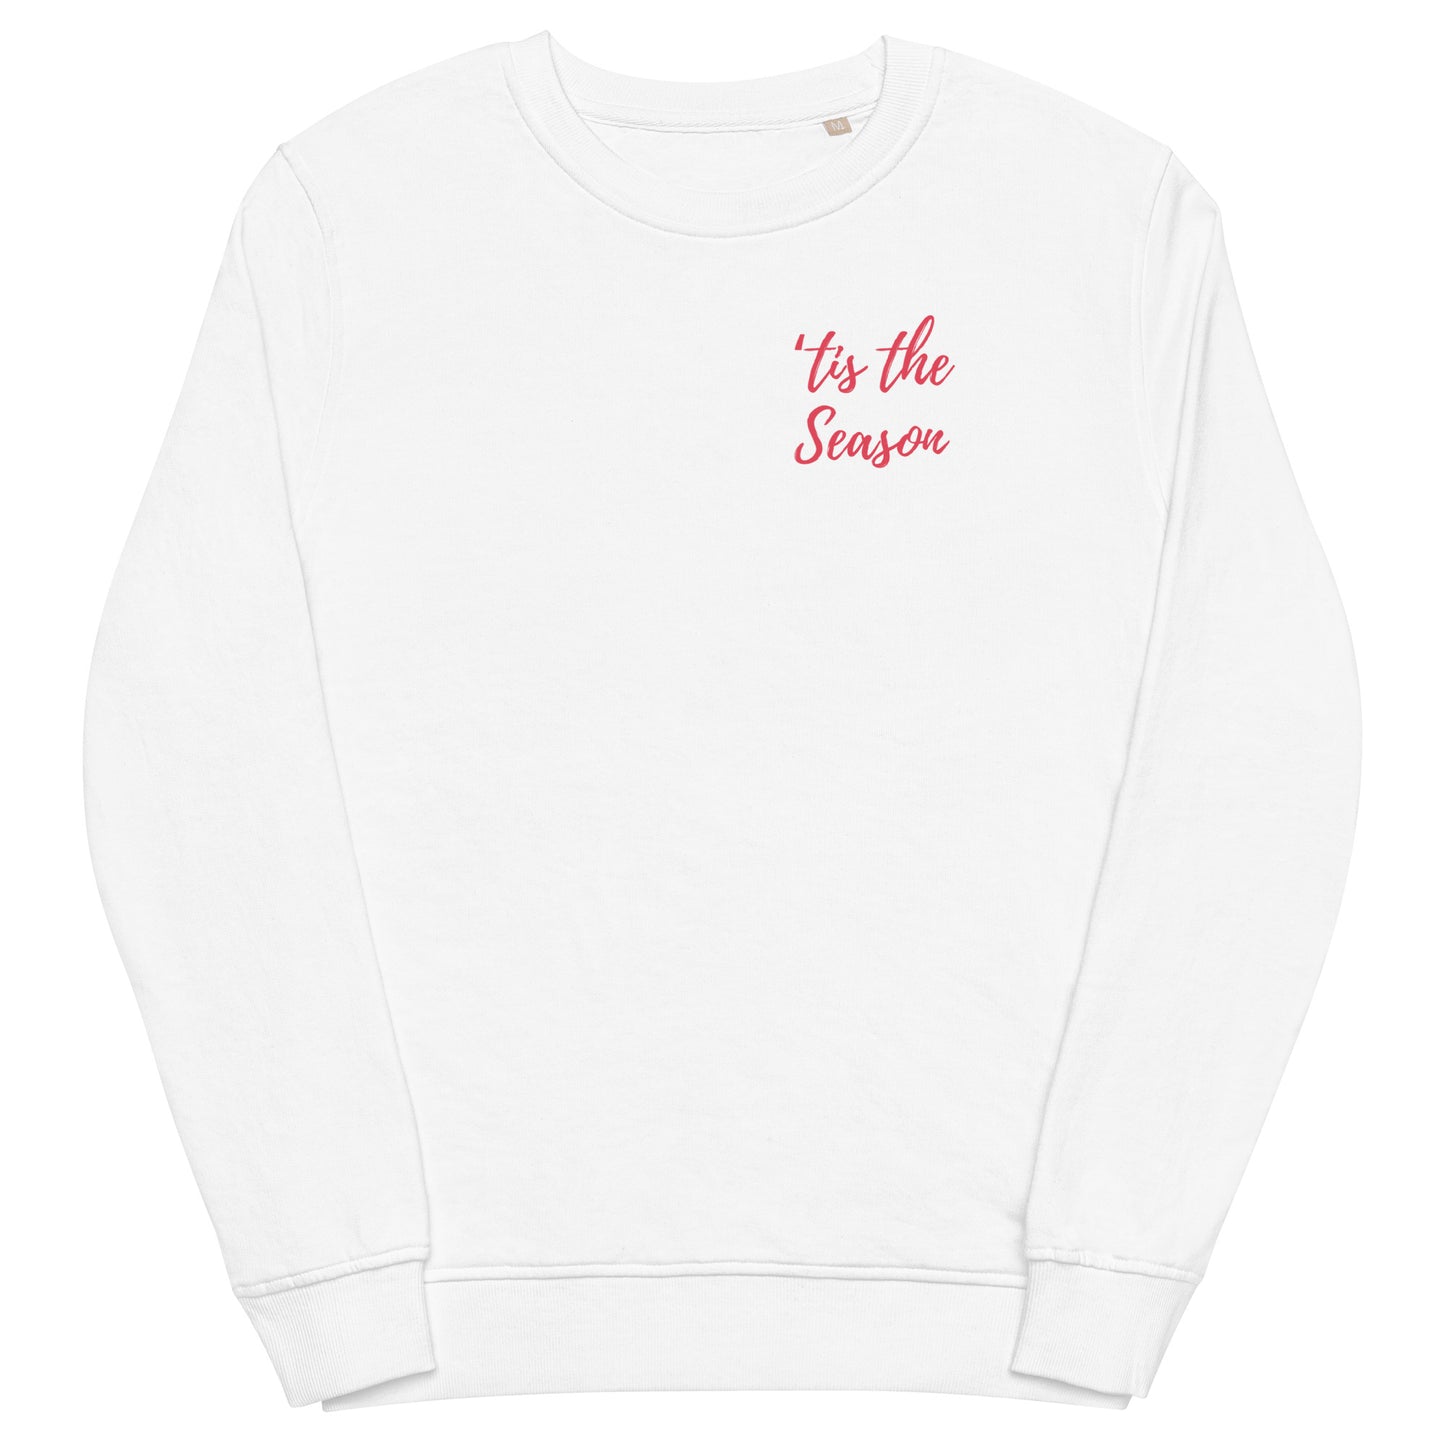 Tis the Season - Unisex Organic Sweatshirt